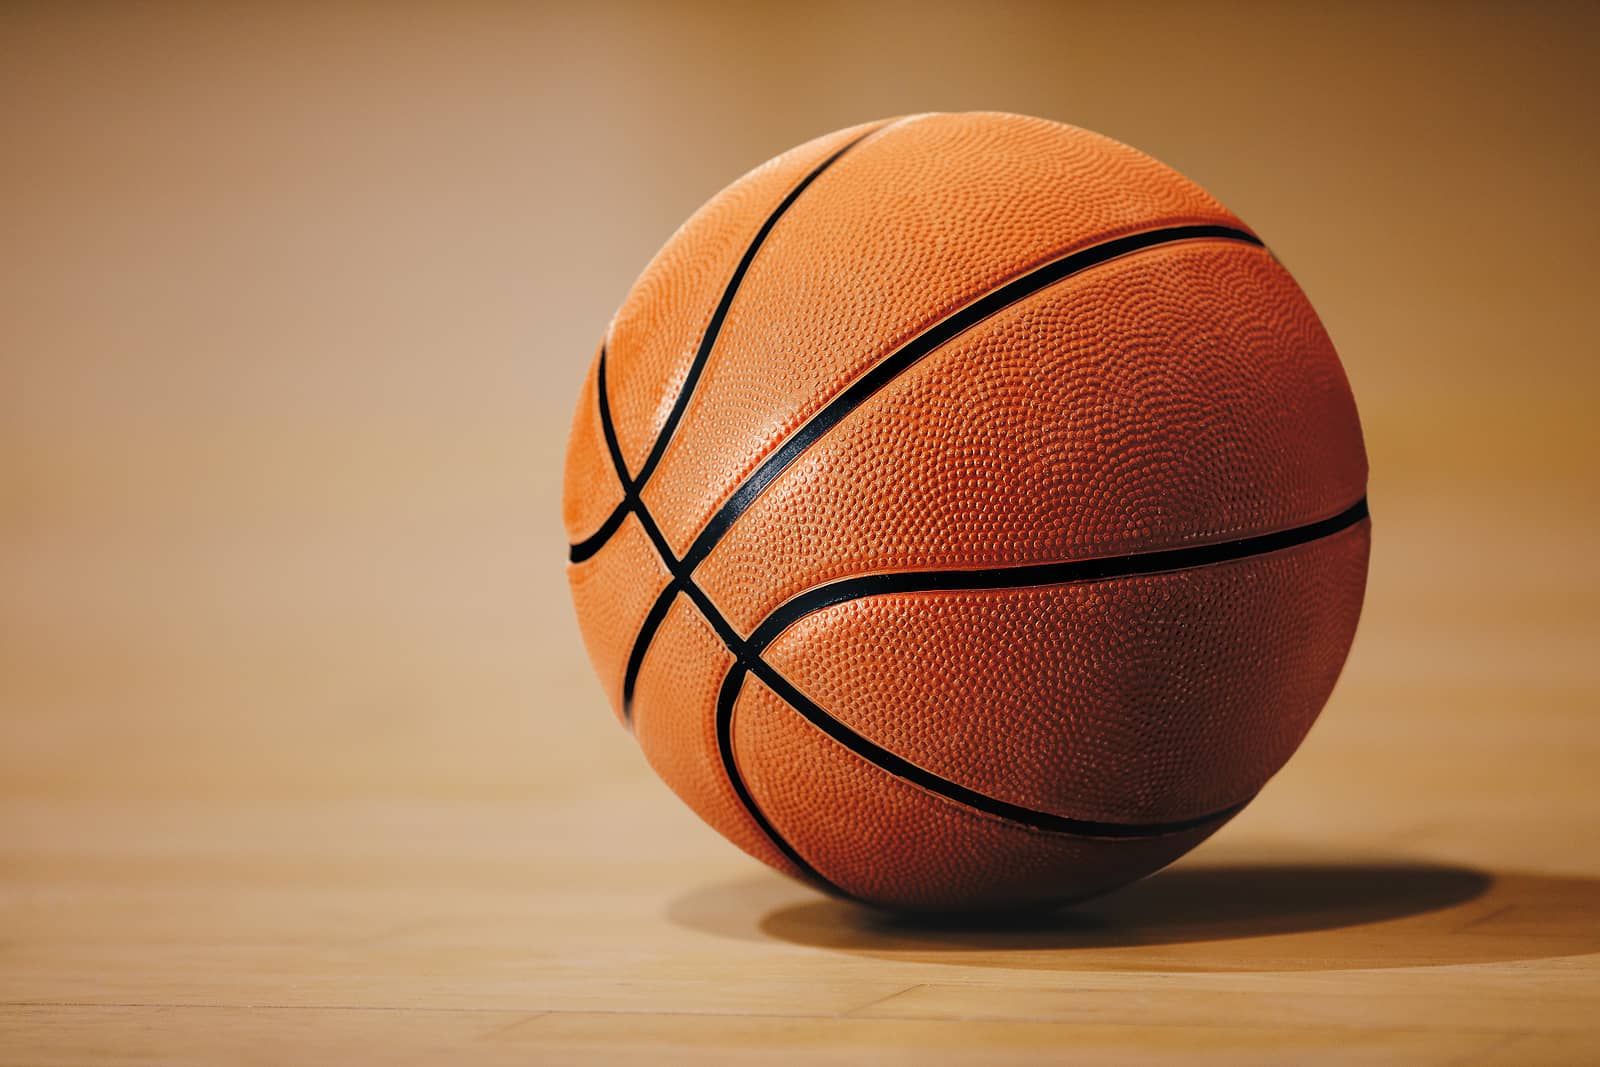 basketball-on-basketball-parquet-floor-close-up-image-basketba